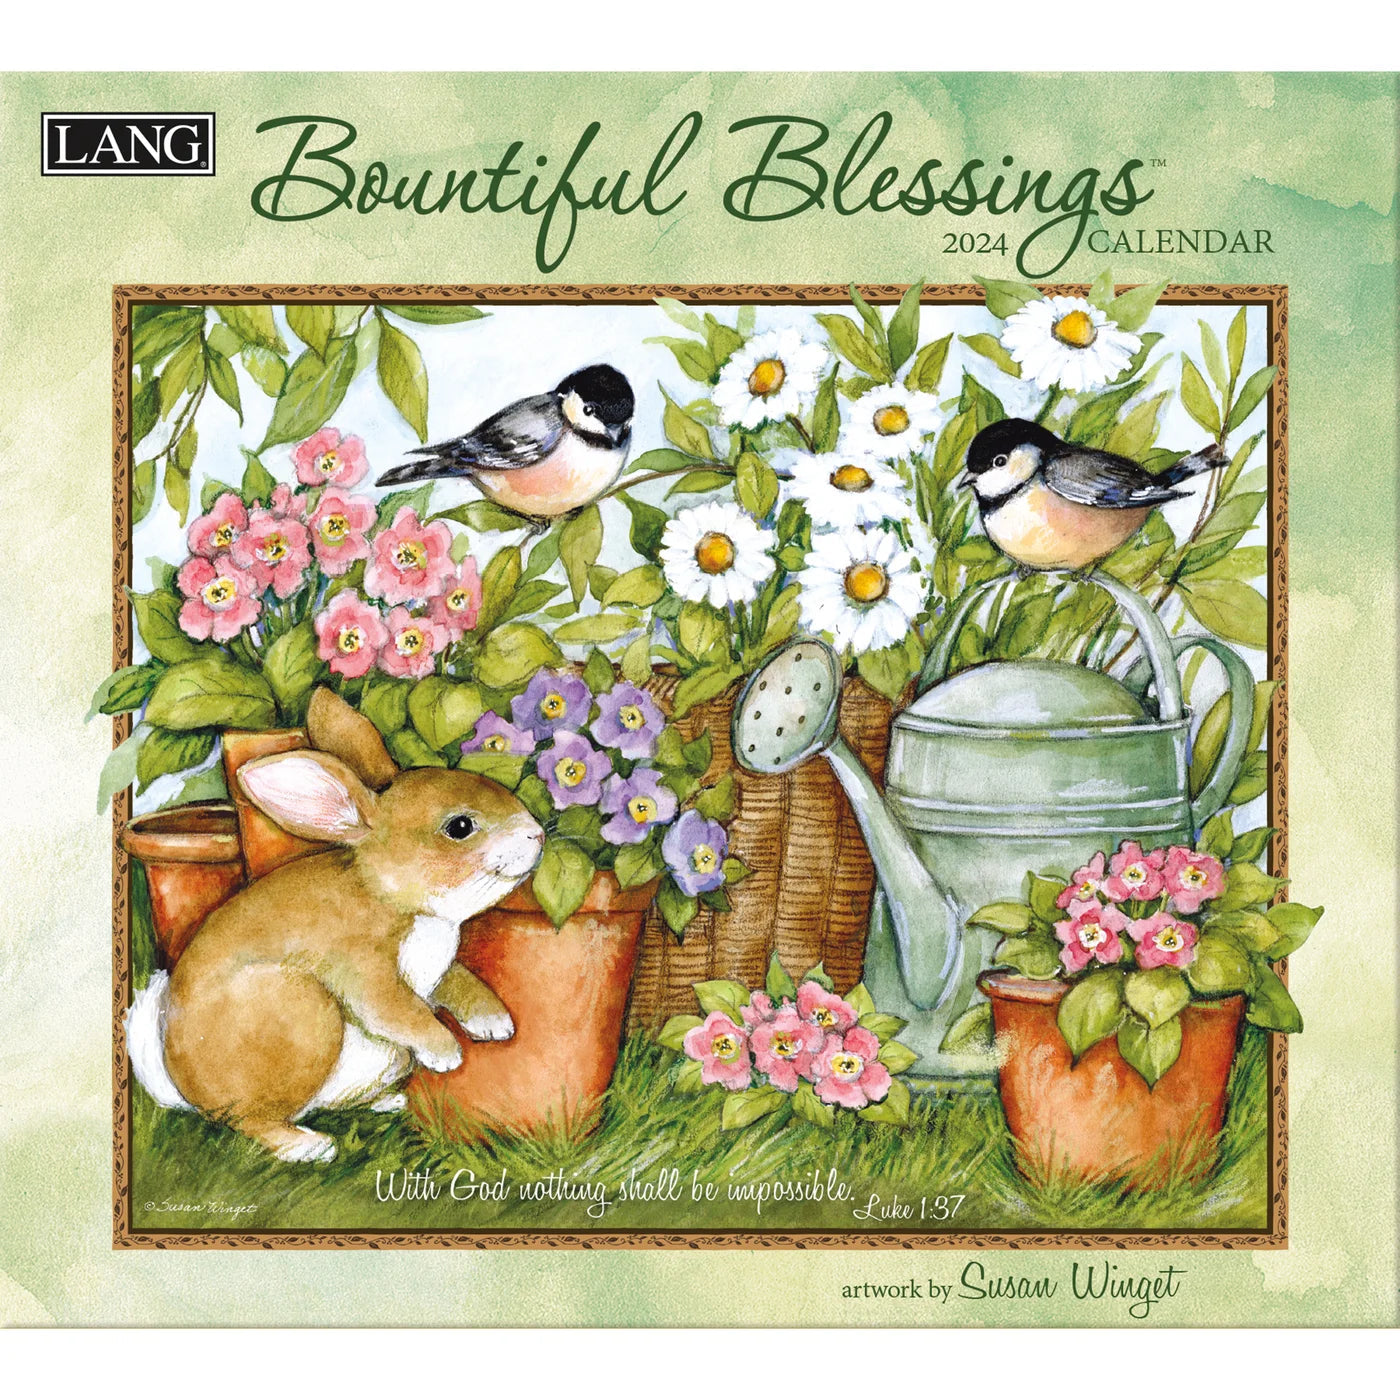 2024 LANG Bountiful Blessings By Susan Winget - Deluxe Wall Calendar